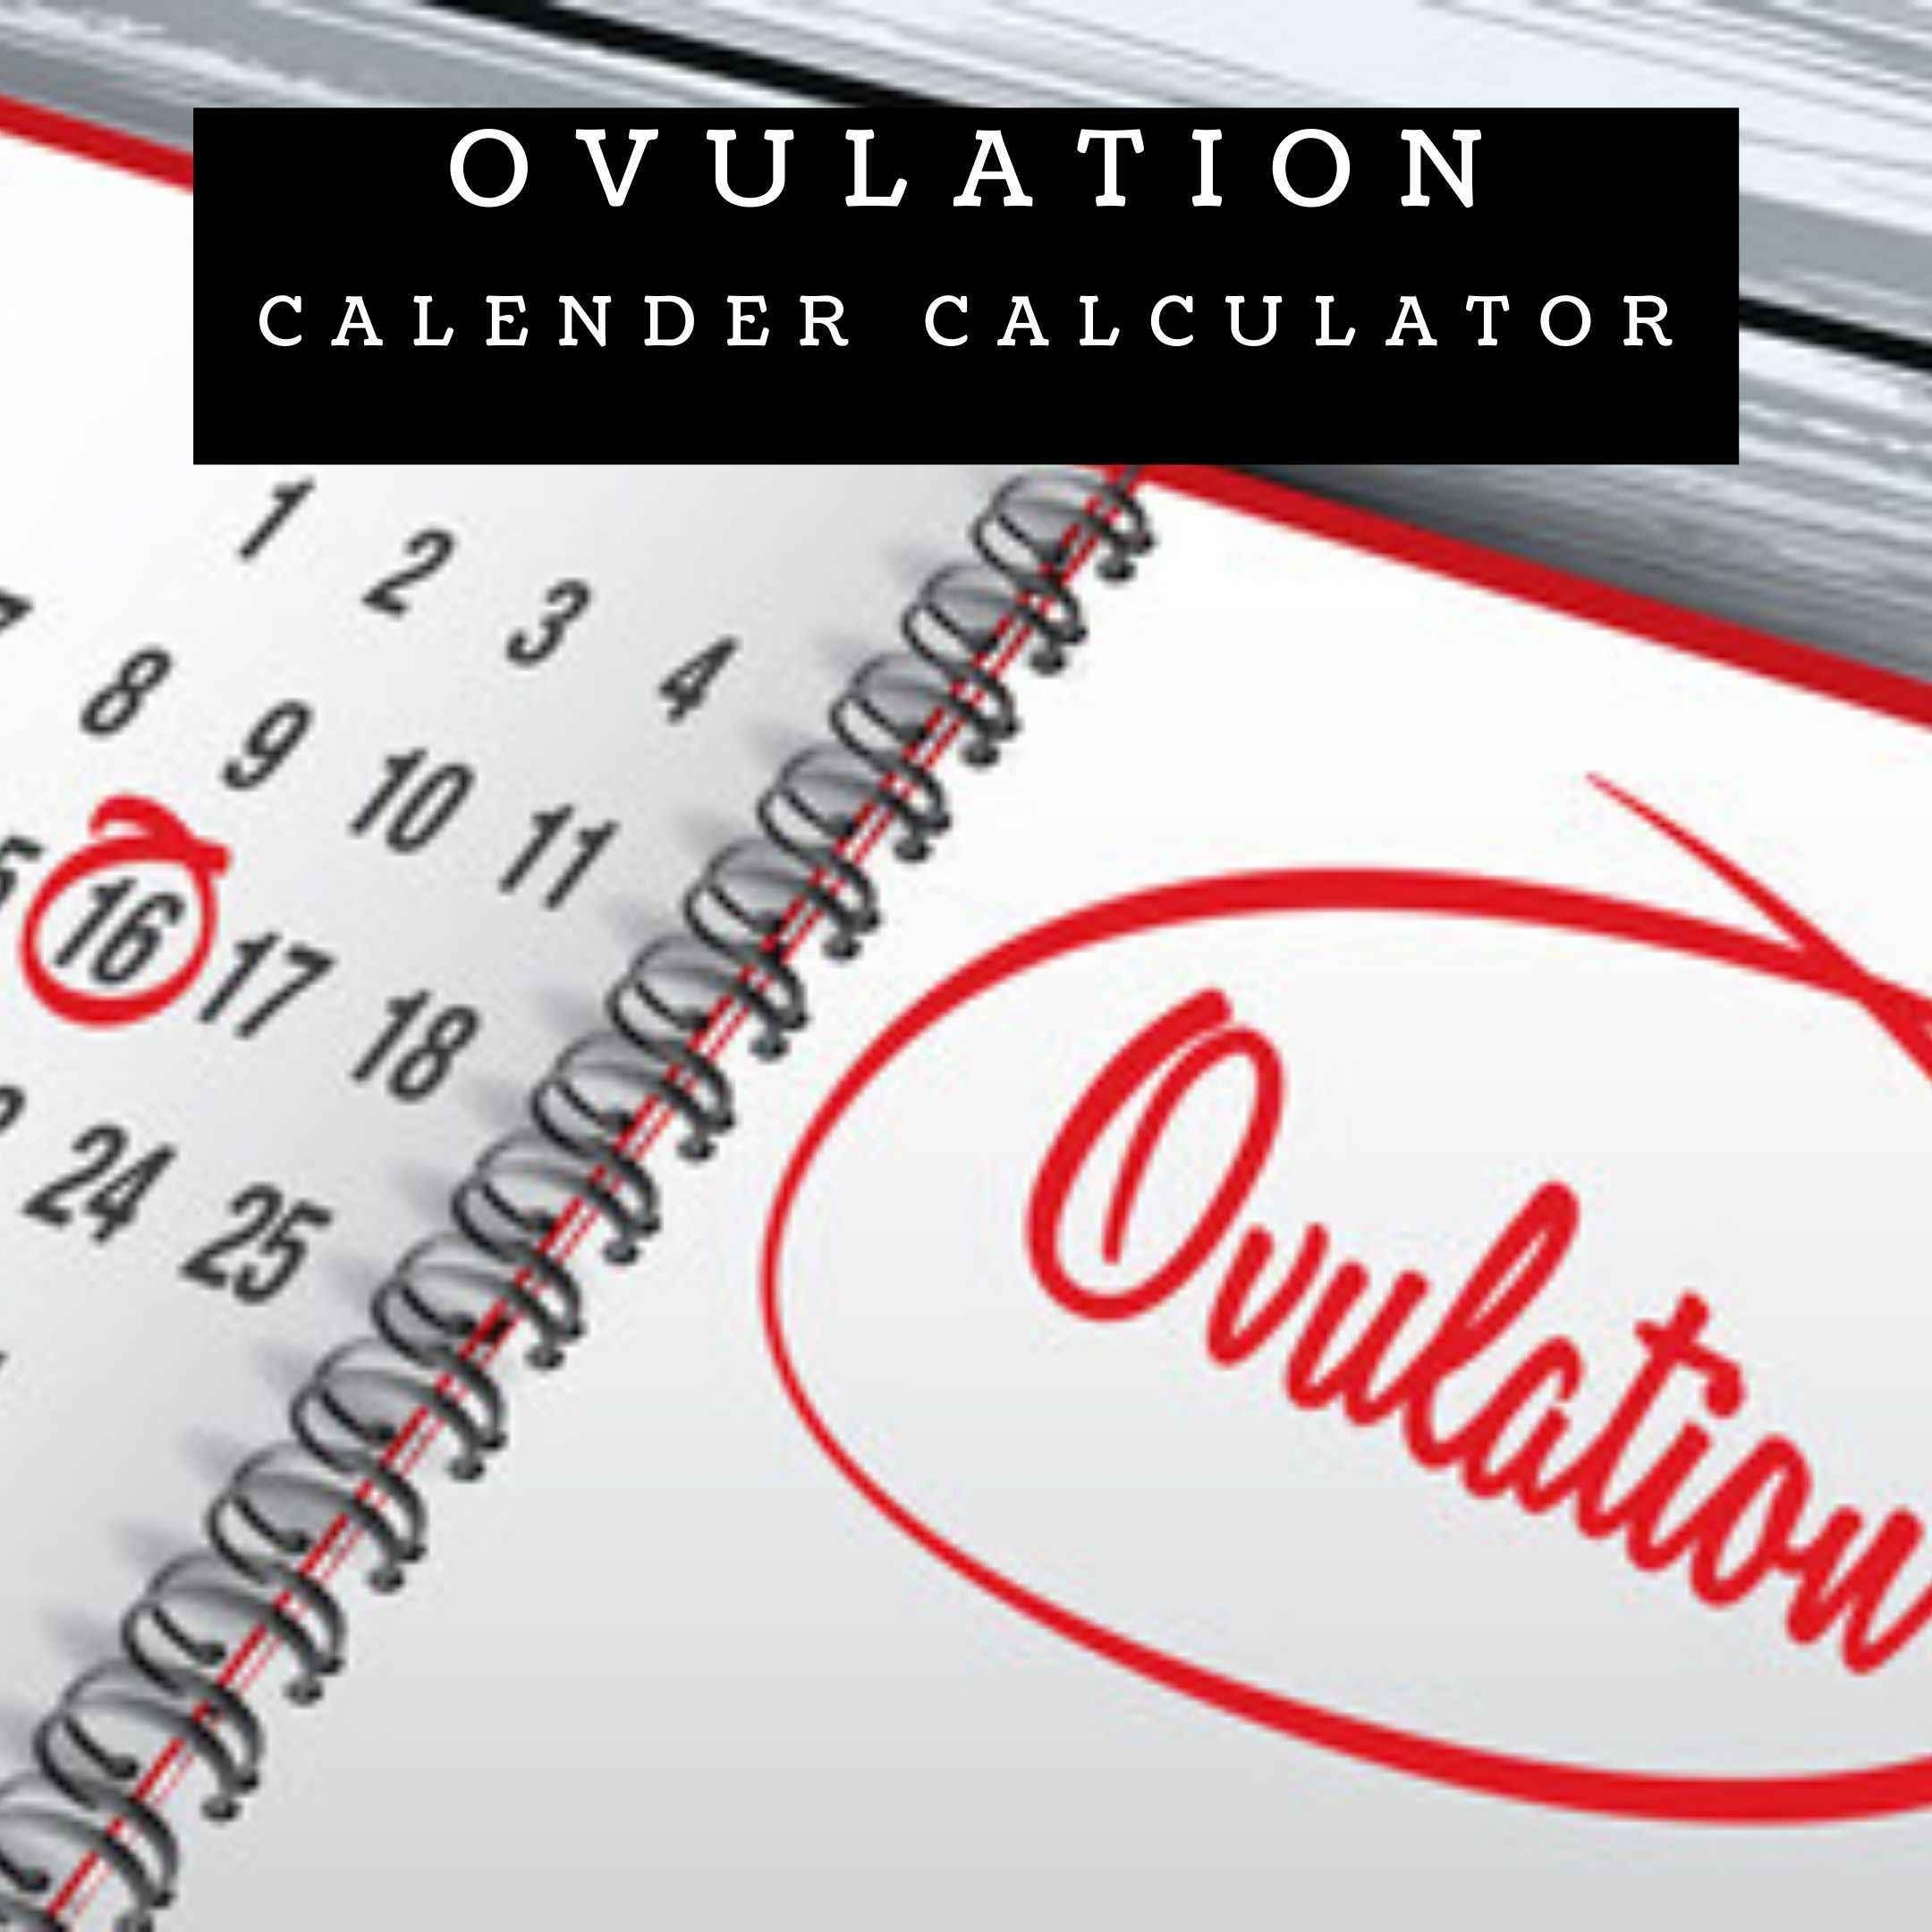 Online Ovulation Calendar Calculator | Pregnancy Vitamins Perky 3 Month Ovulation Calendar Calculator